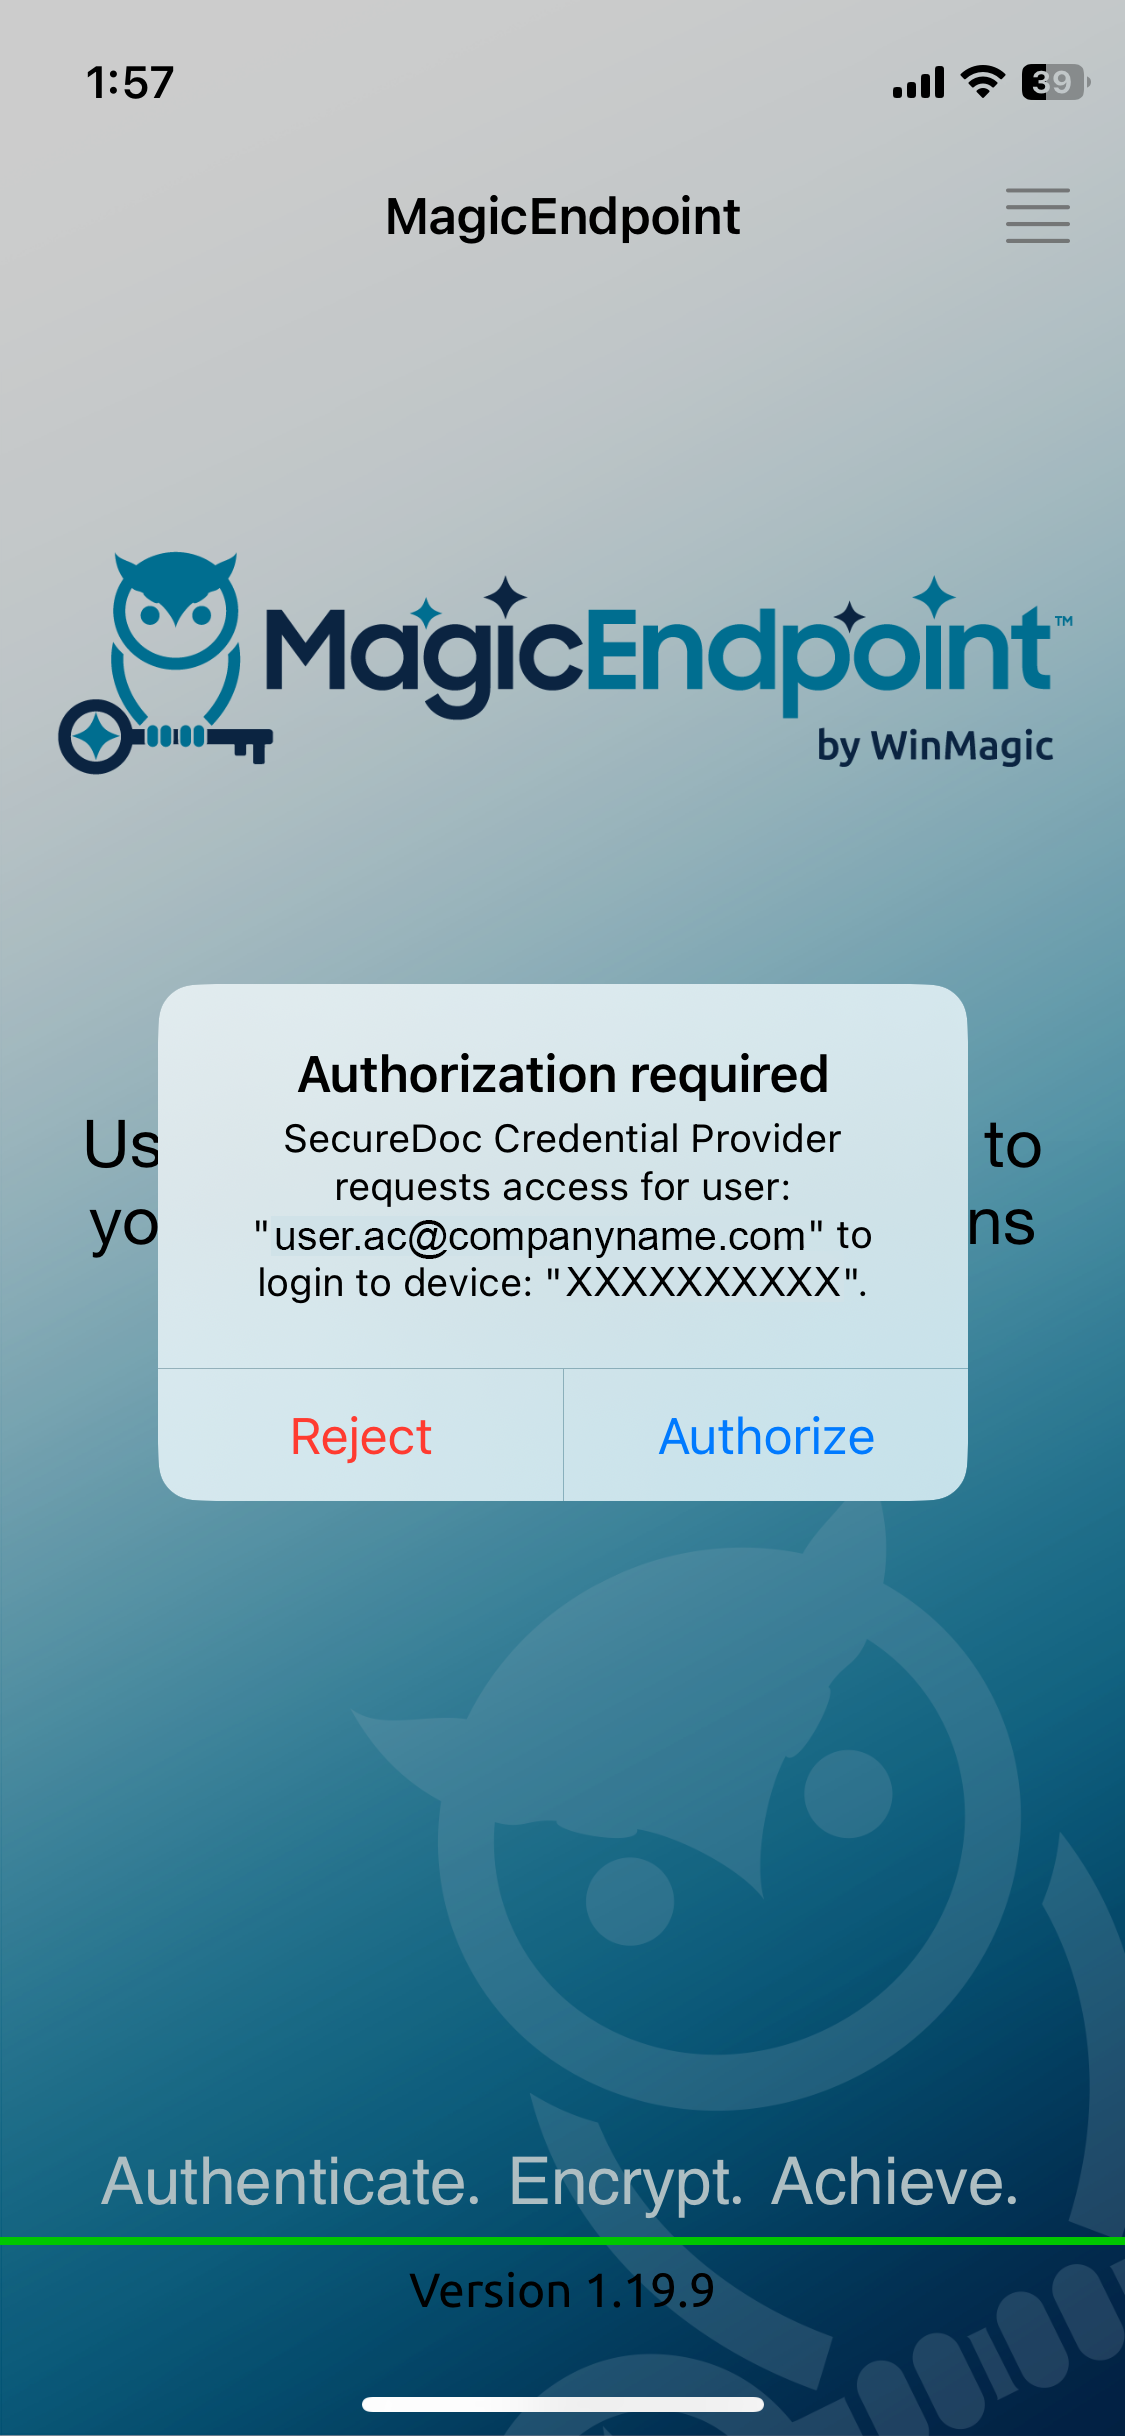 MagicEndpoint authnetication message